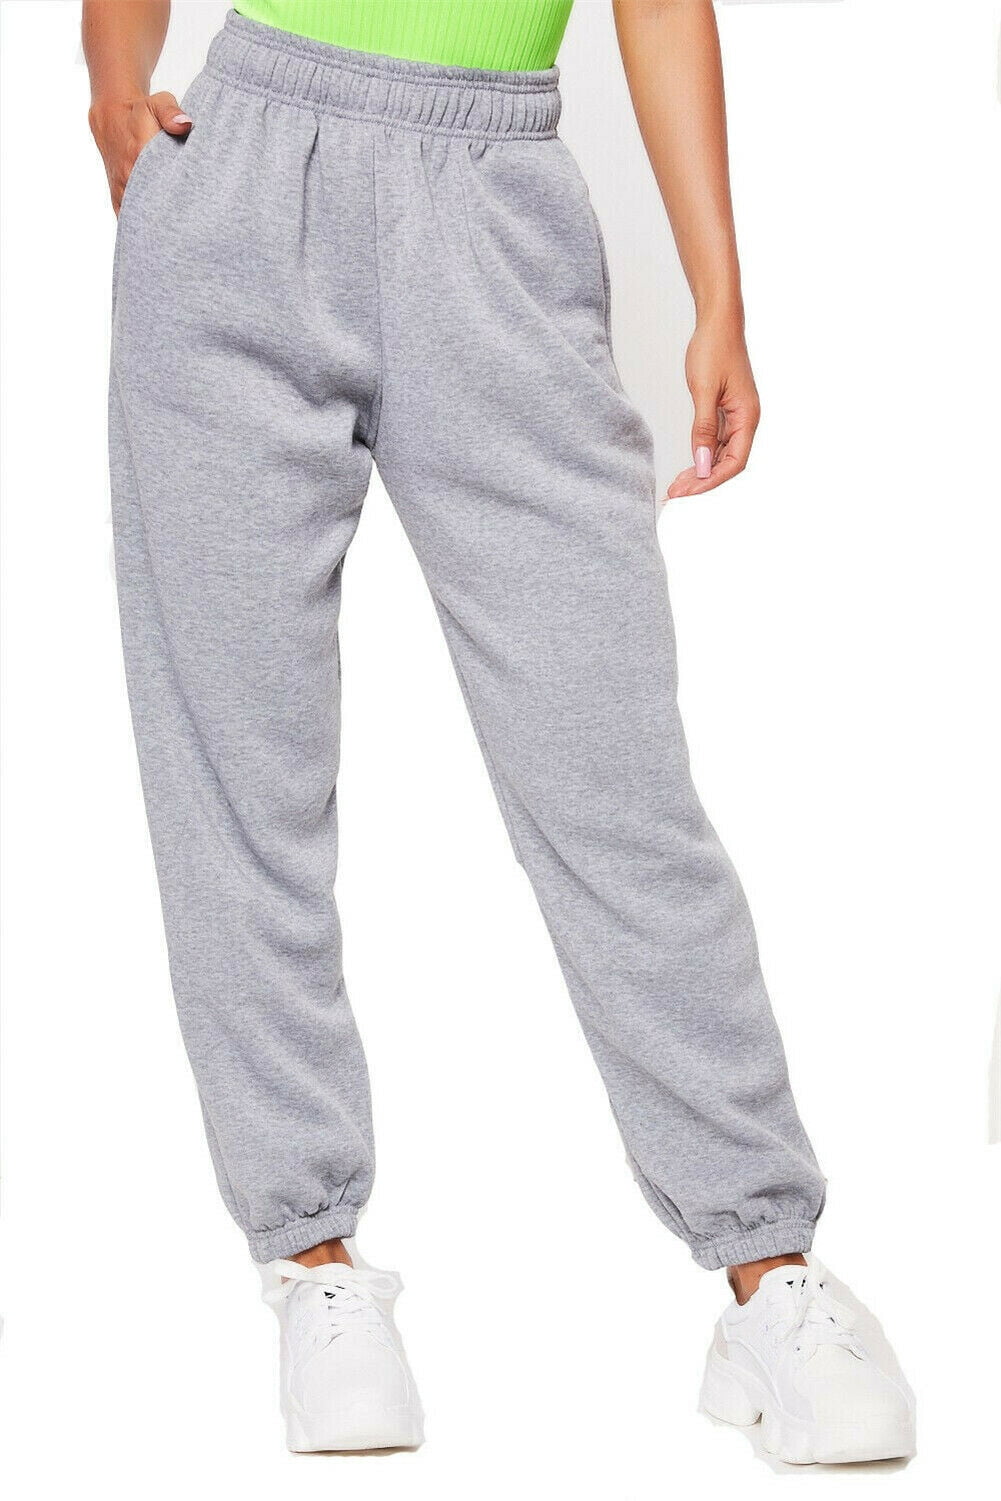 Women/Men Pocket Loose Baggy Sweatpants Yoga Jogger Sport Harem Trousers Elastic